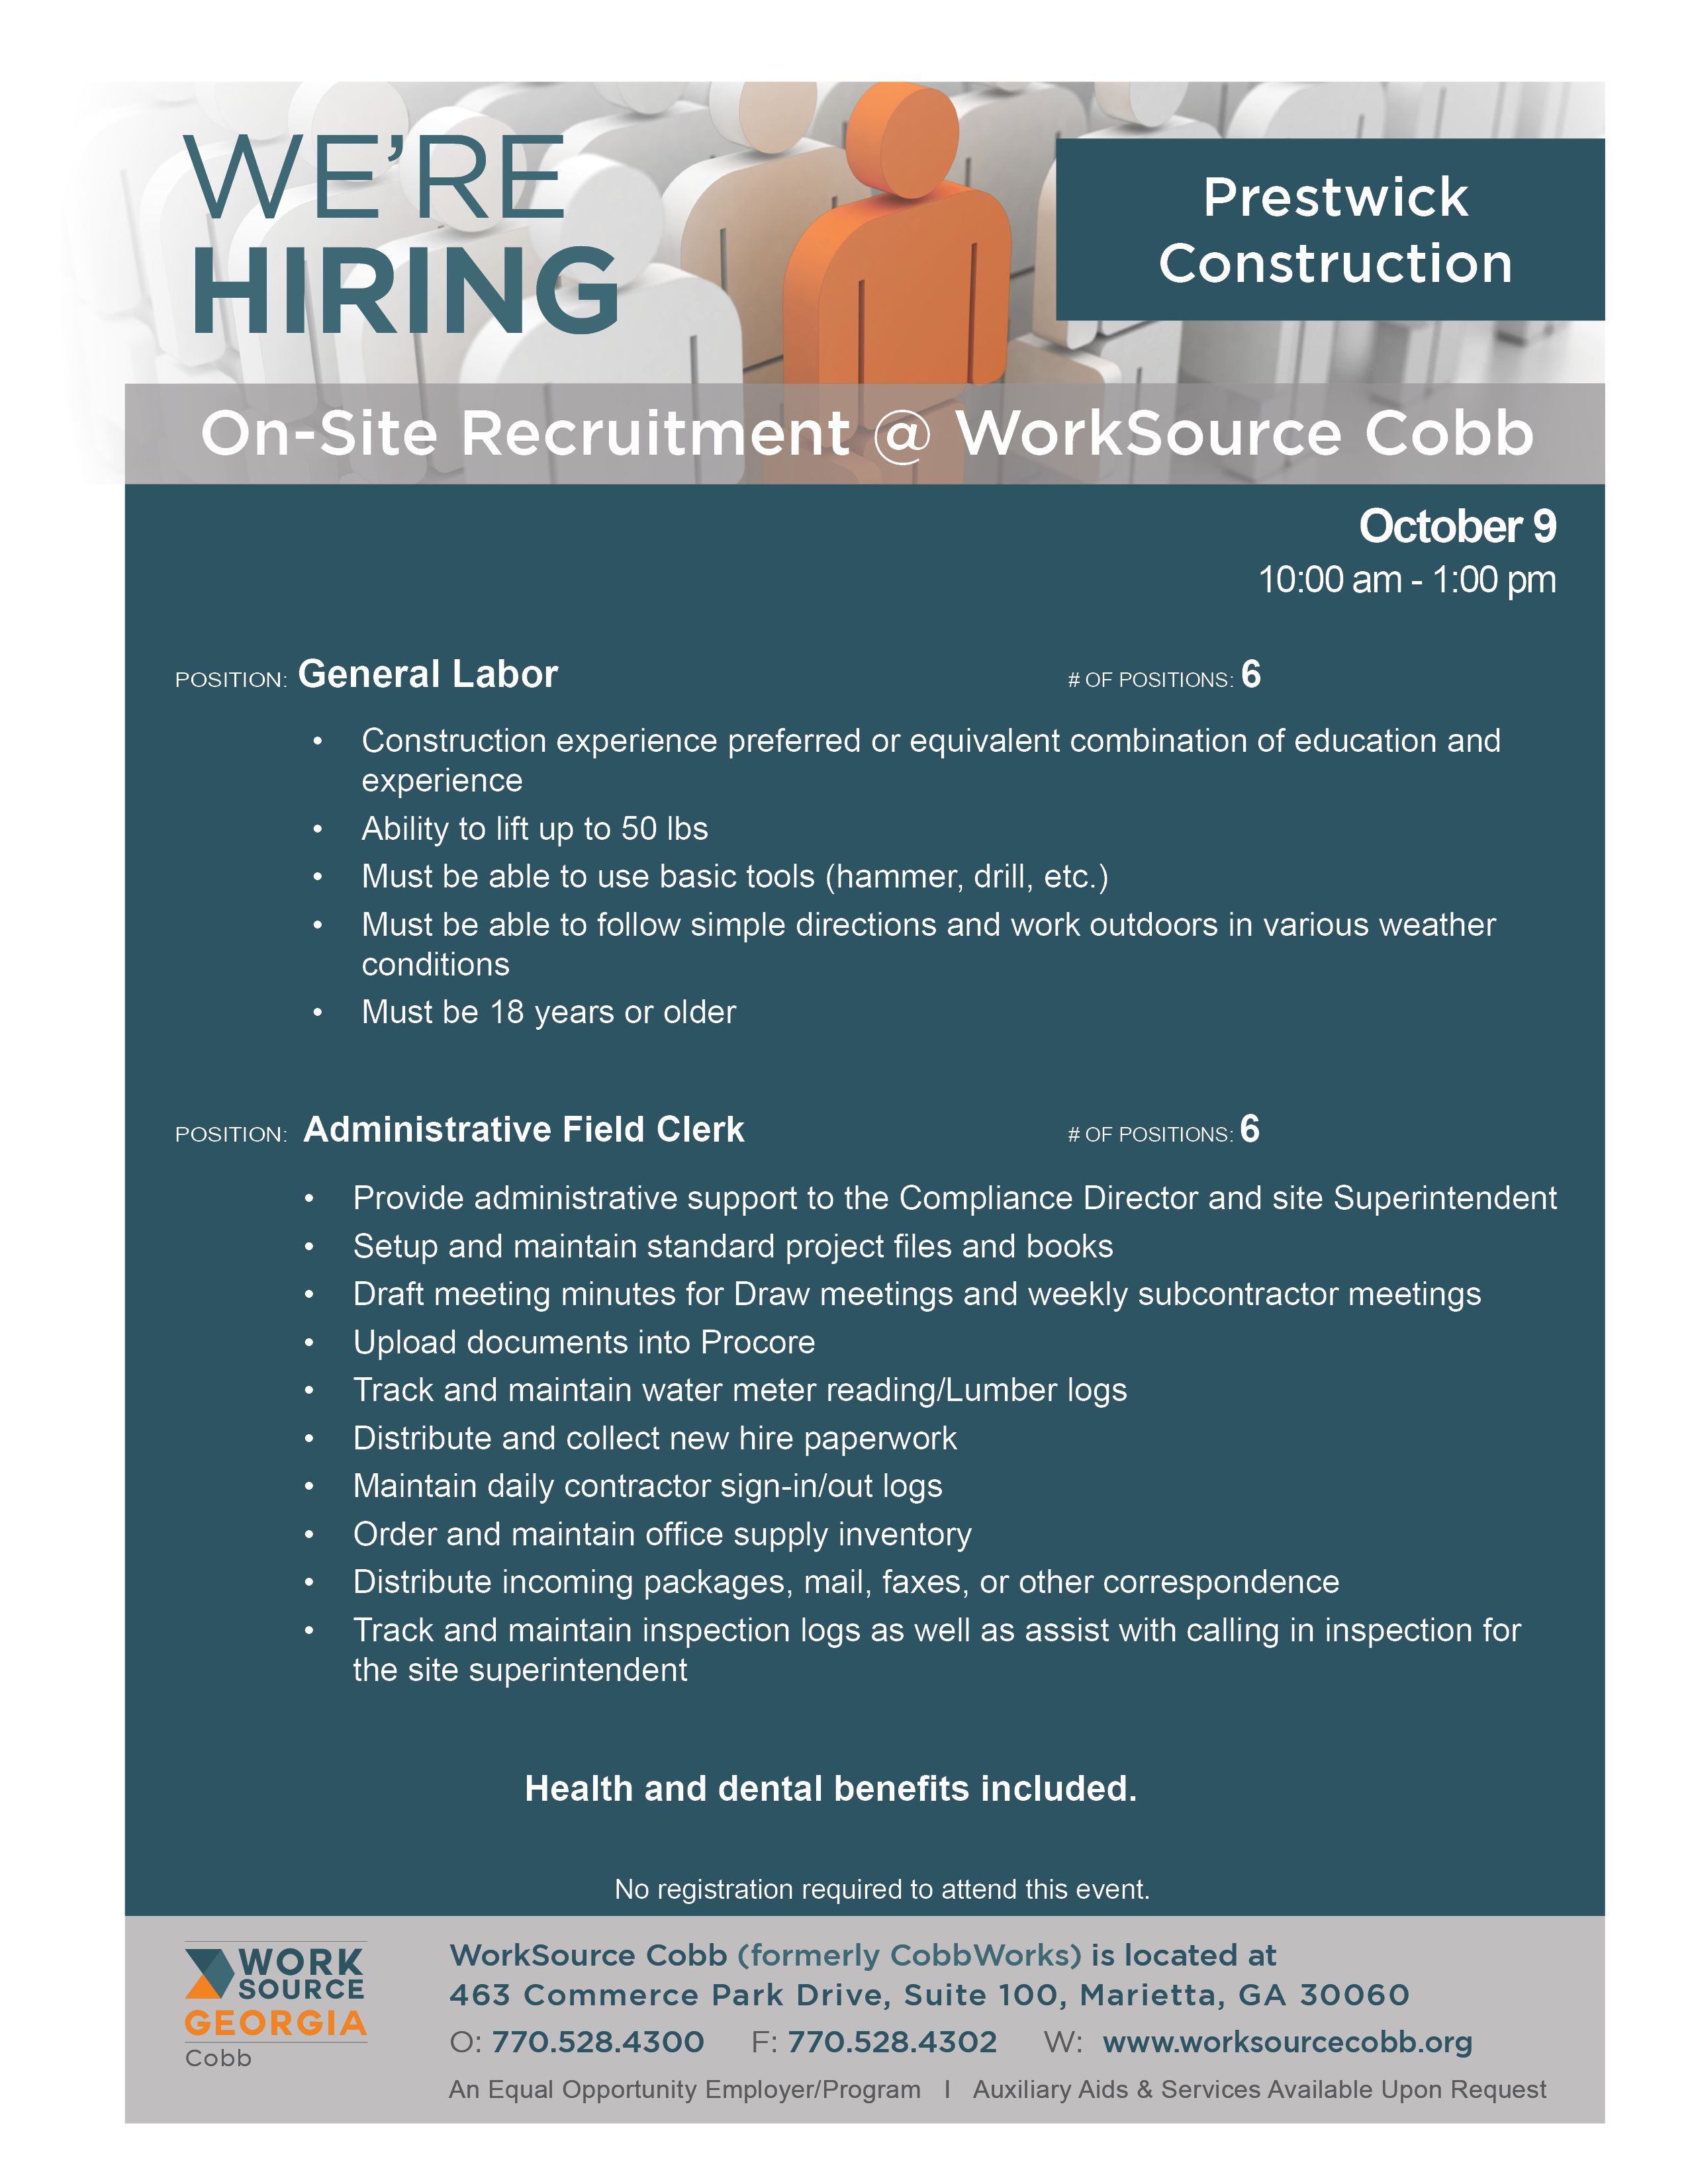 Prestwick construction recruitment on October 9